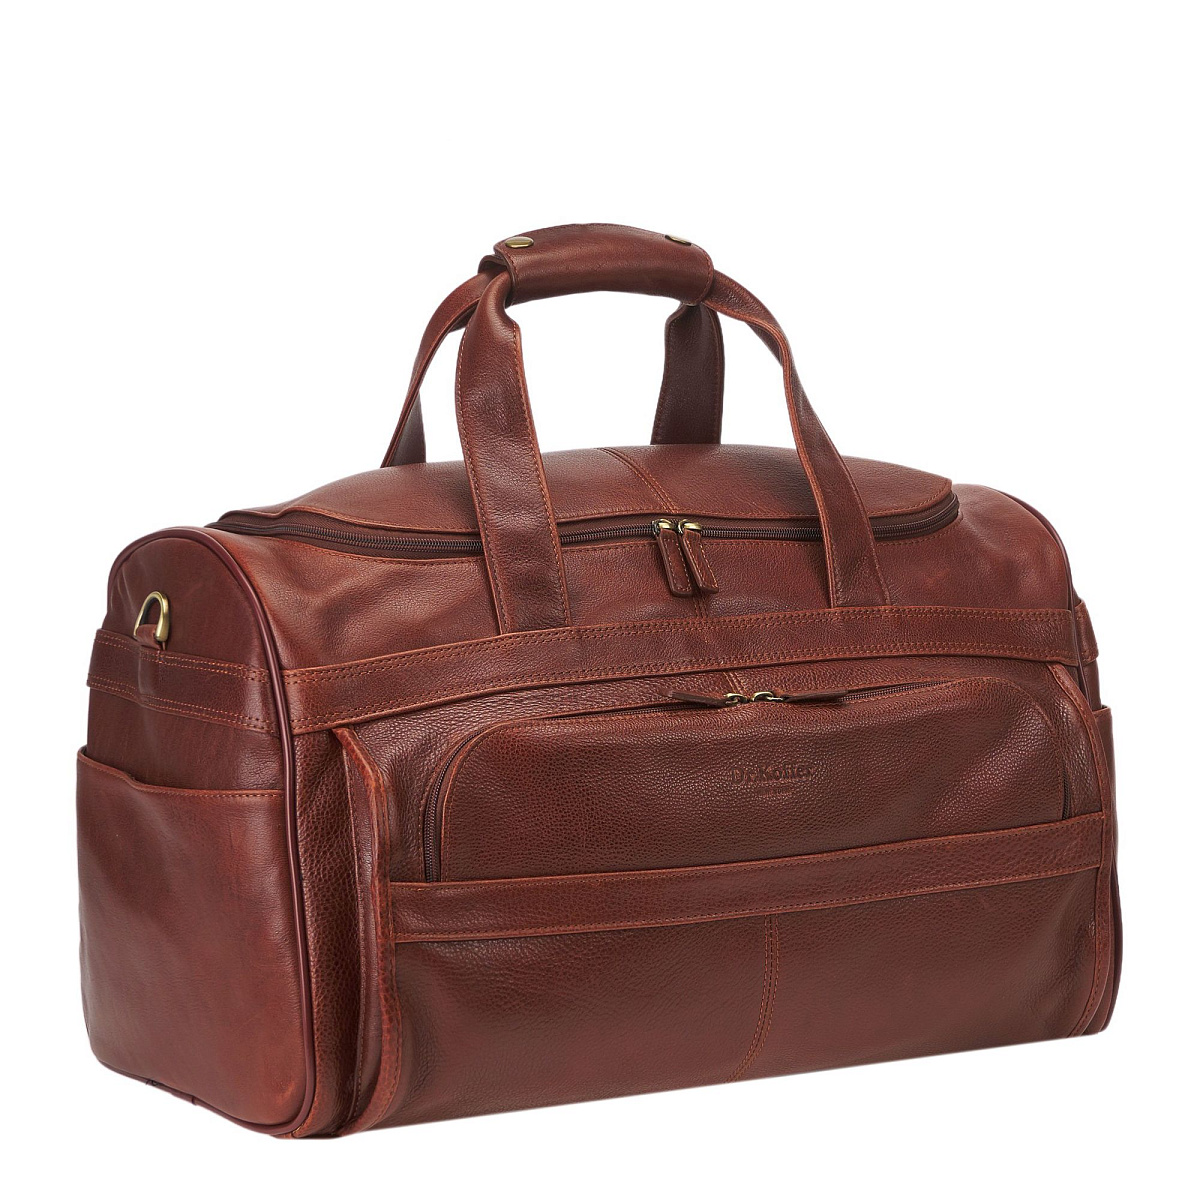 Коричневая дорожно-спортивная сумка с карманами на молнии Dr.Koffer B246370-02-05